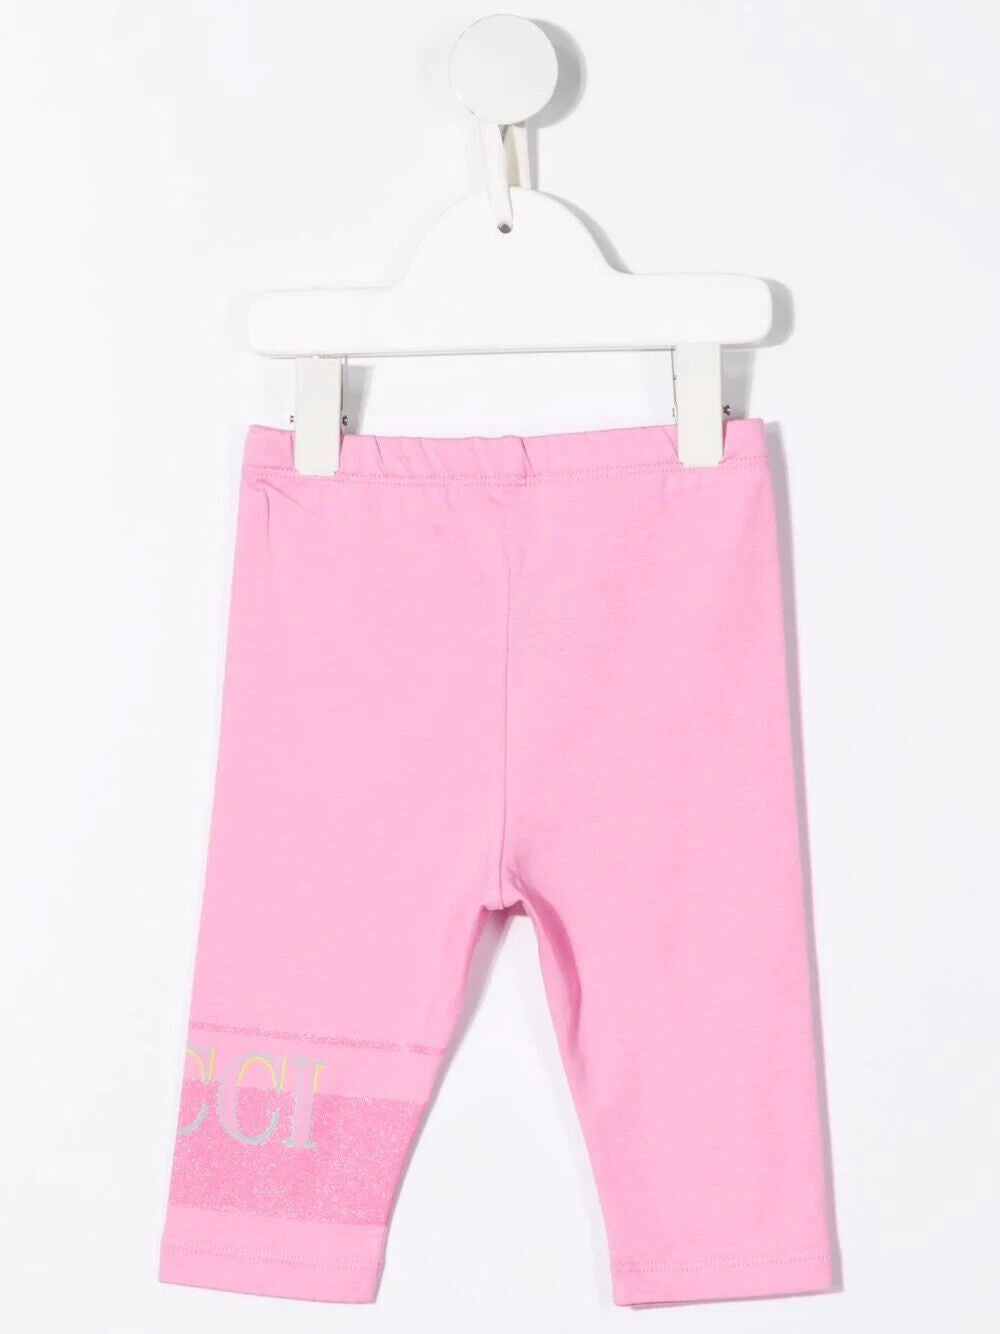 Emilio Pucci Baby Girls Pink Glitter Motif Leggings Size 3 Months **** V22